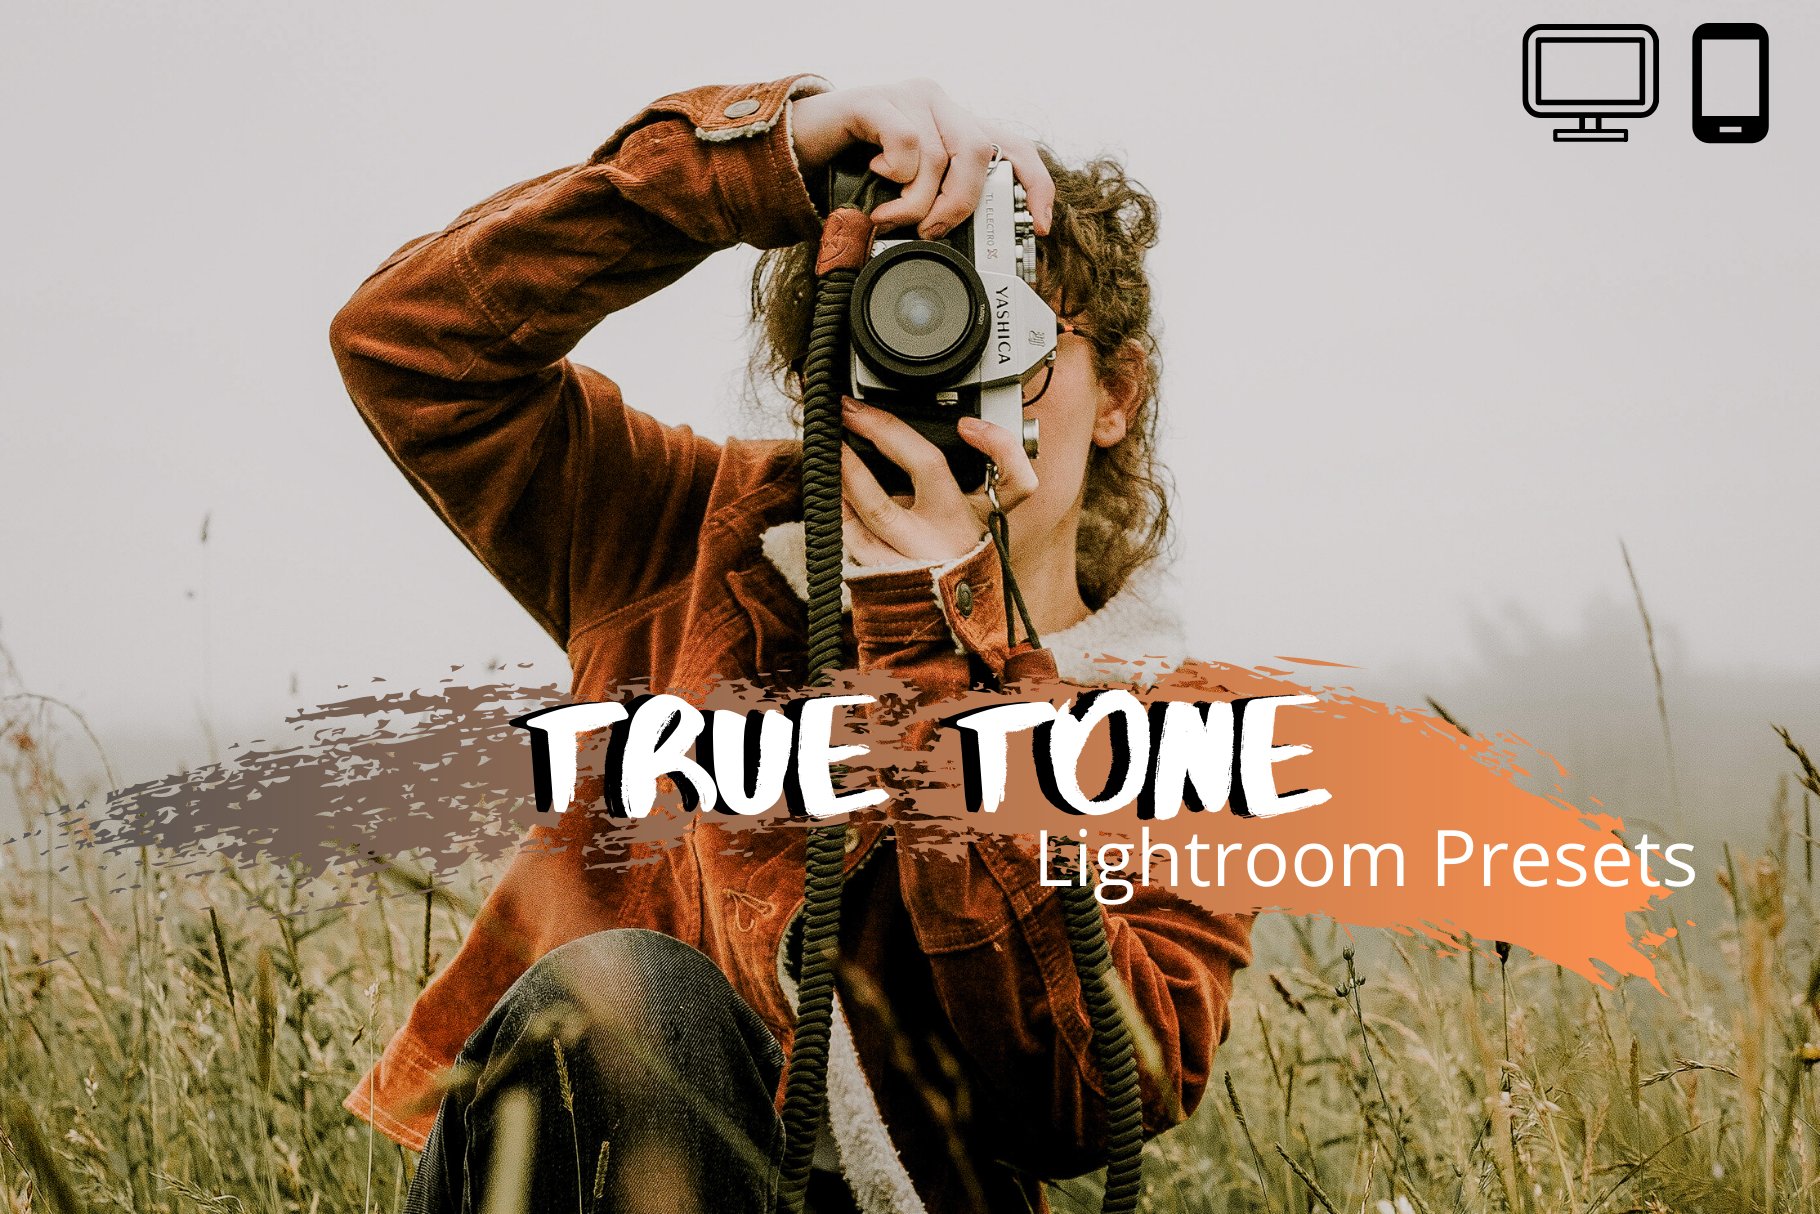 True Tone Lightroom Presets XMP/DNGcover image.